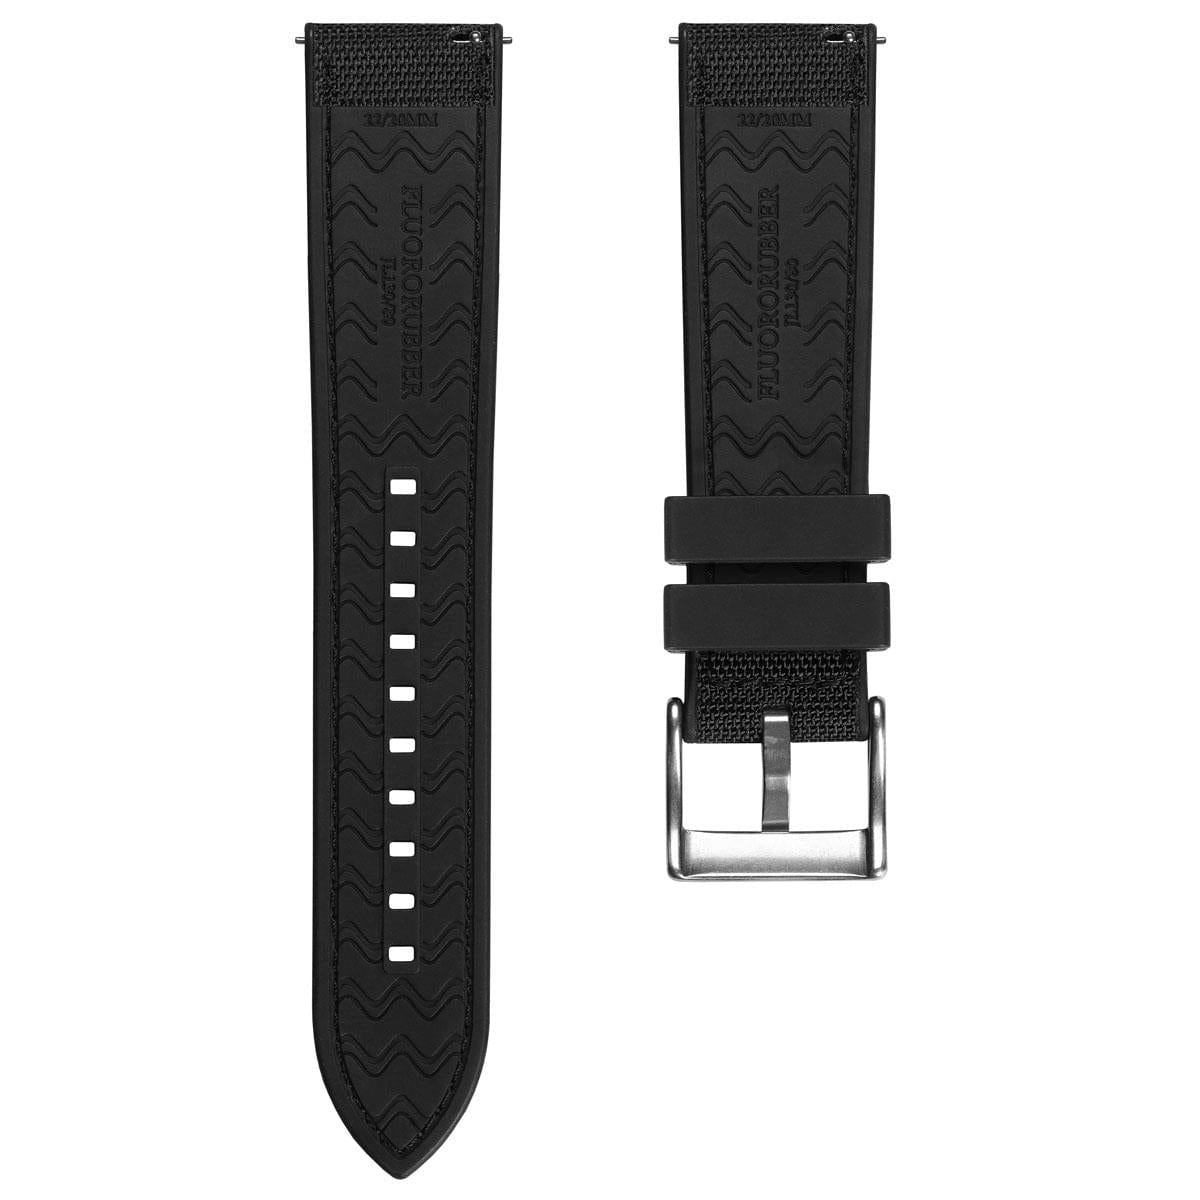 ZULUDIVER Endurance Extreme Rubber Watch Strap - Black